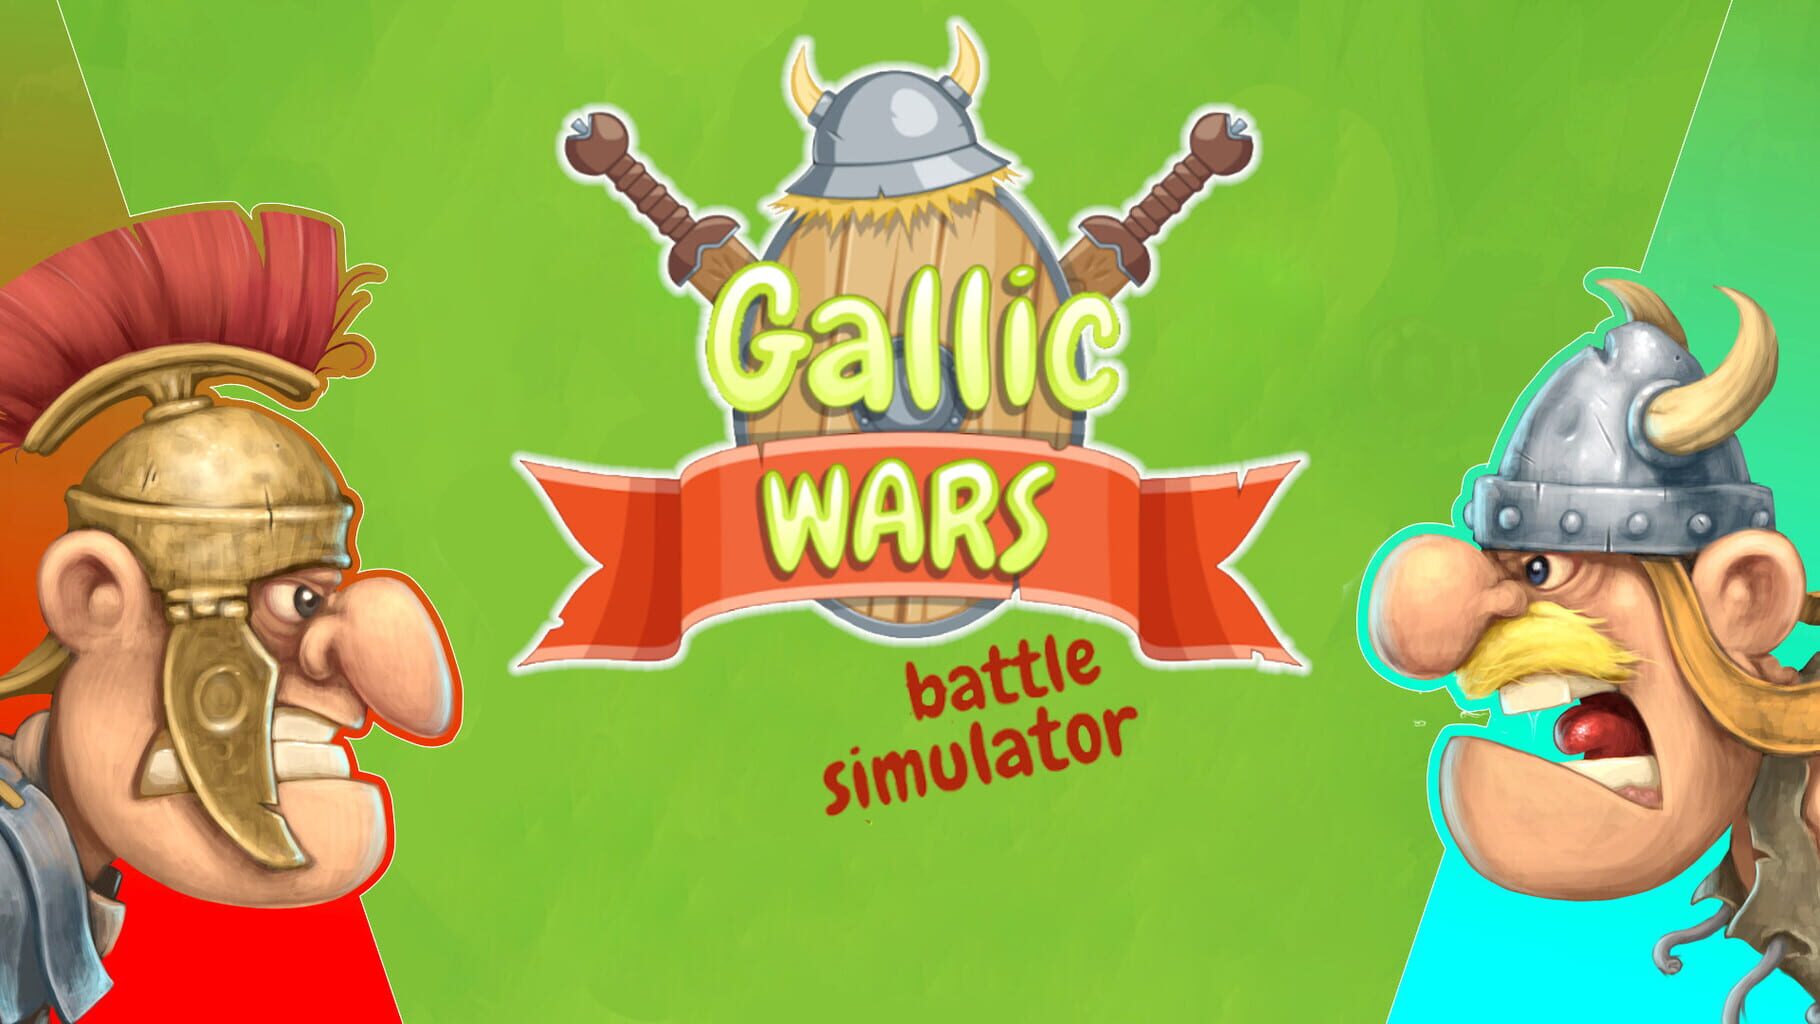 Gallic Wars: Battle Simulator artwork